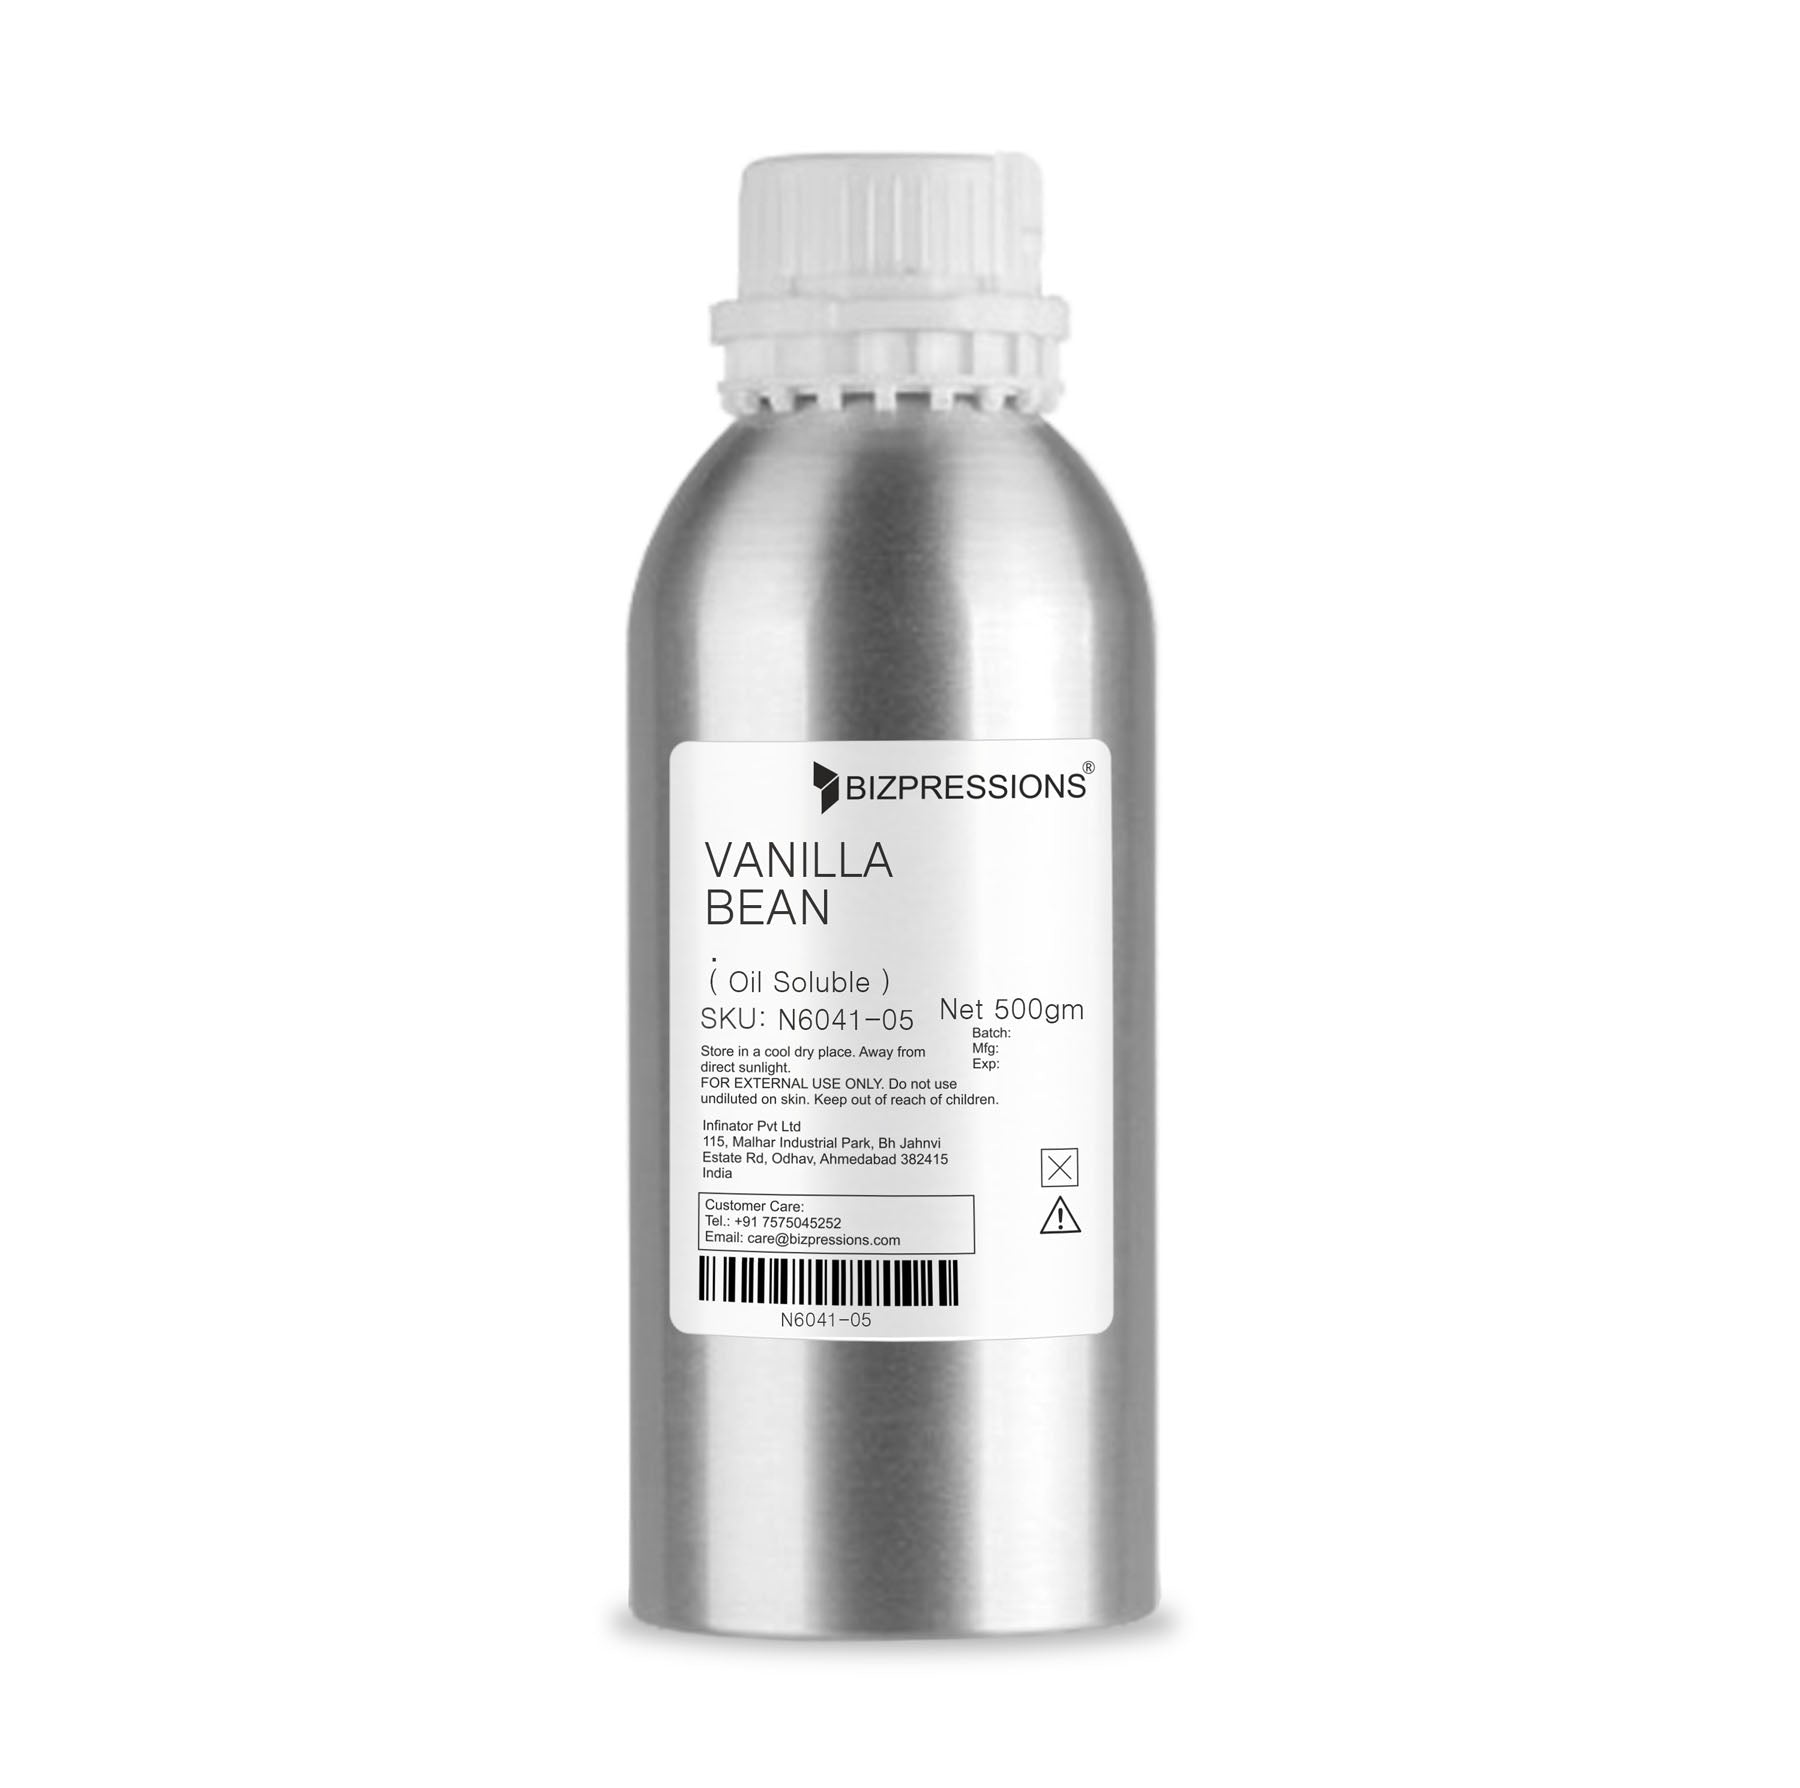 VANILLA BEAN - Fragrance ( Oil Soluble ) - 500 gm